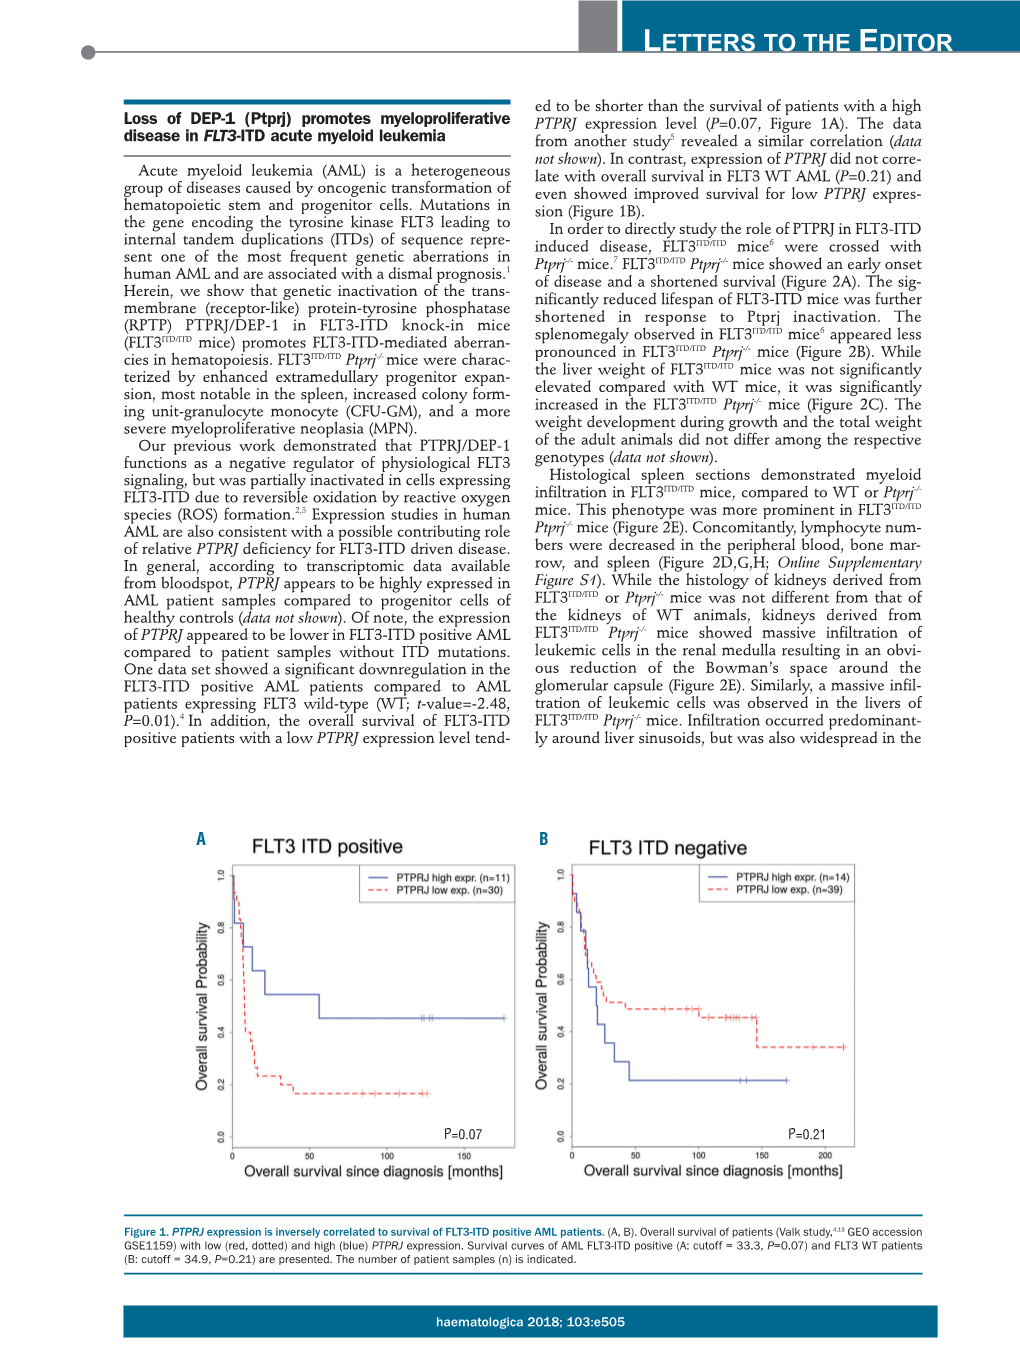 Loss of DEP-1 (Ptprj) Promotes Myeloproliferative Disease in FLT3